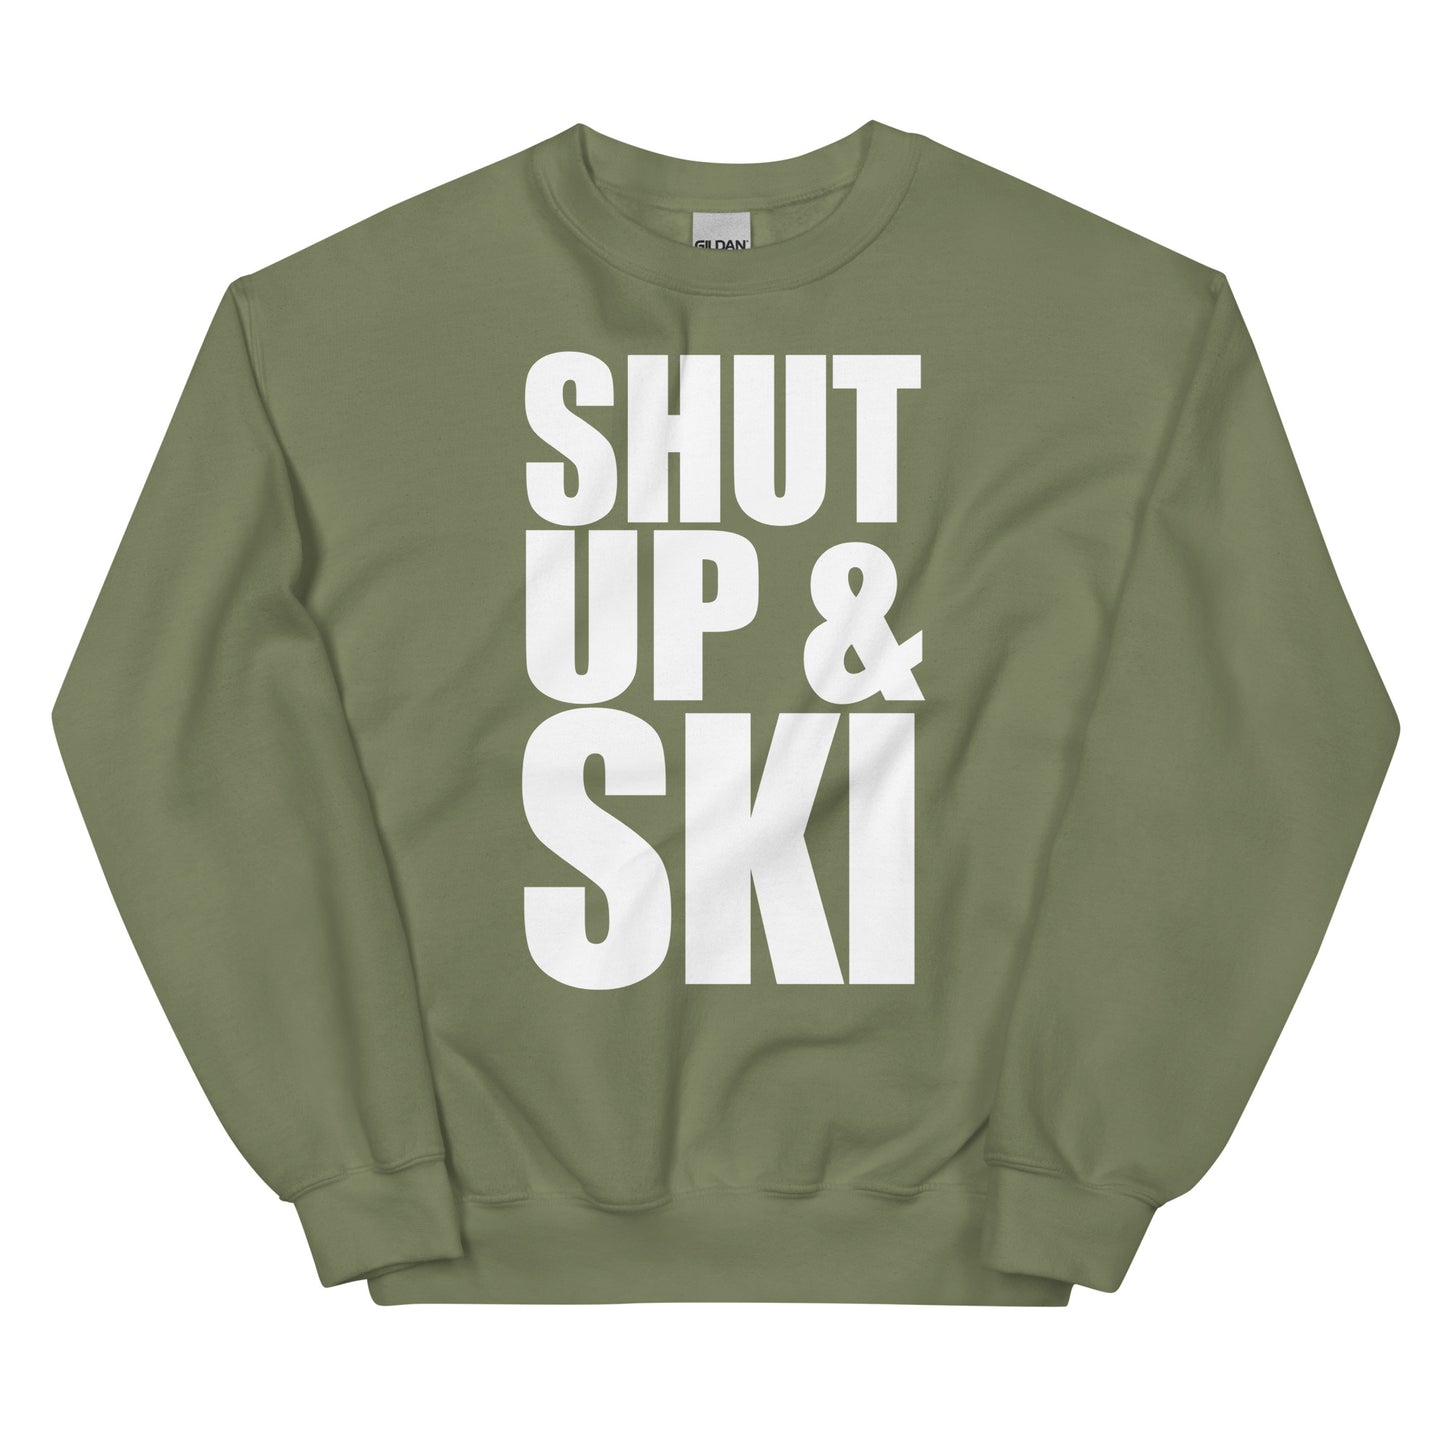 Shut up and ski printed crewneck sweatshirt by Whistler Shirts